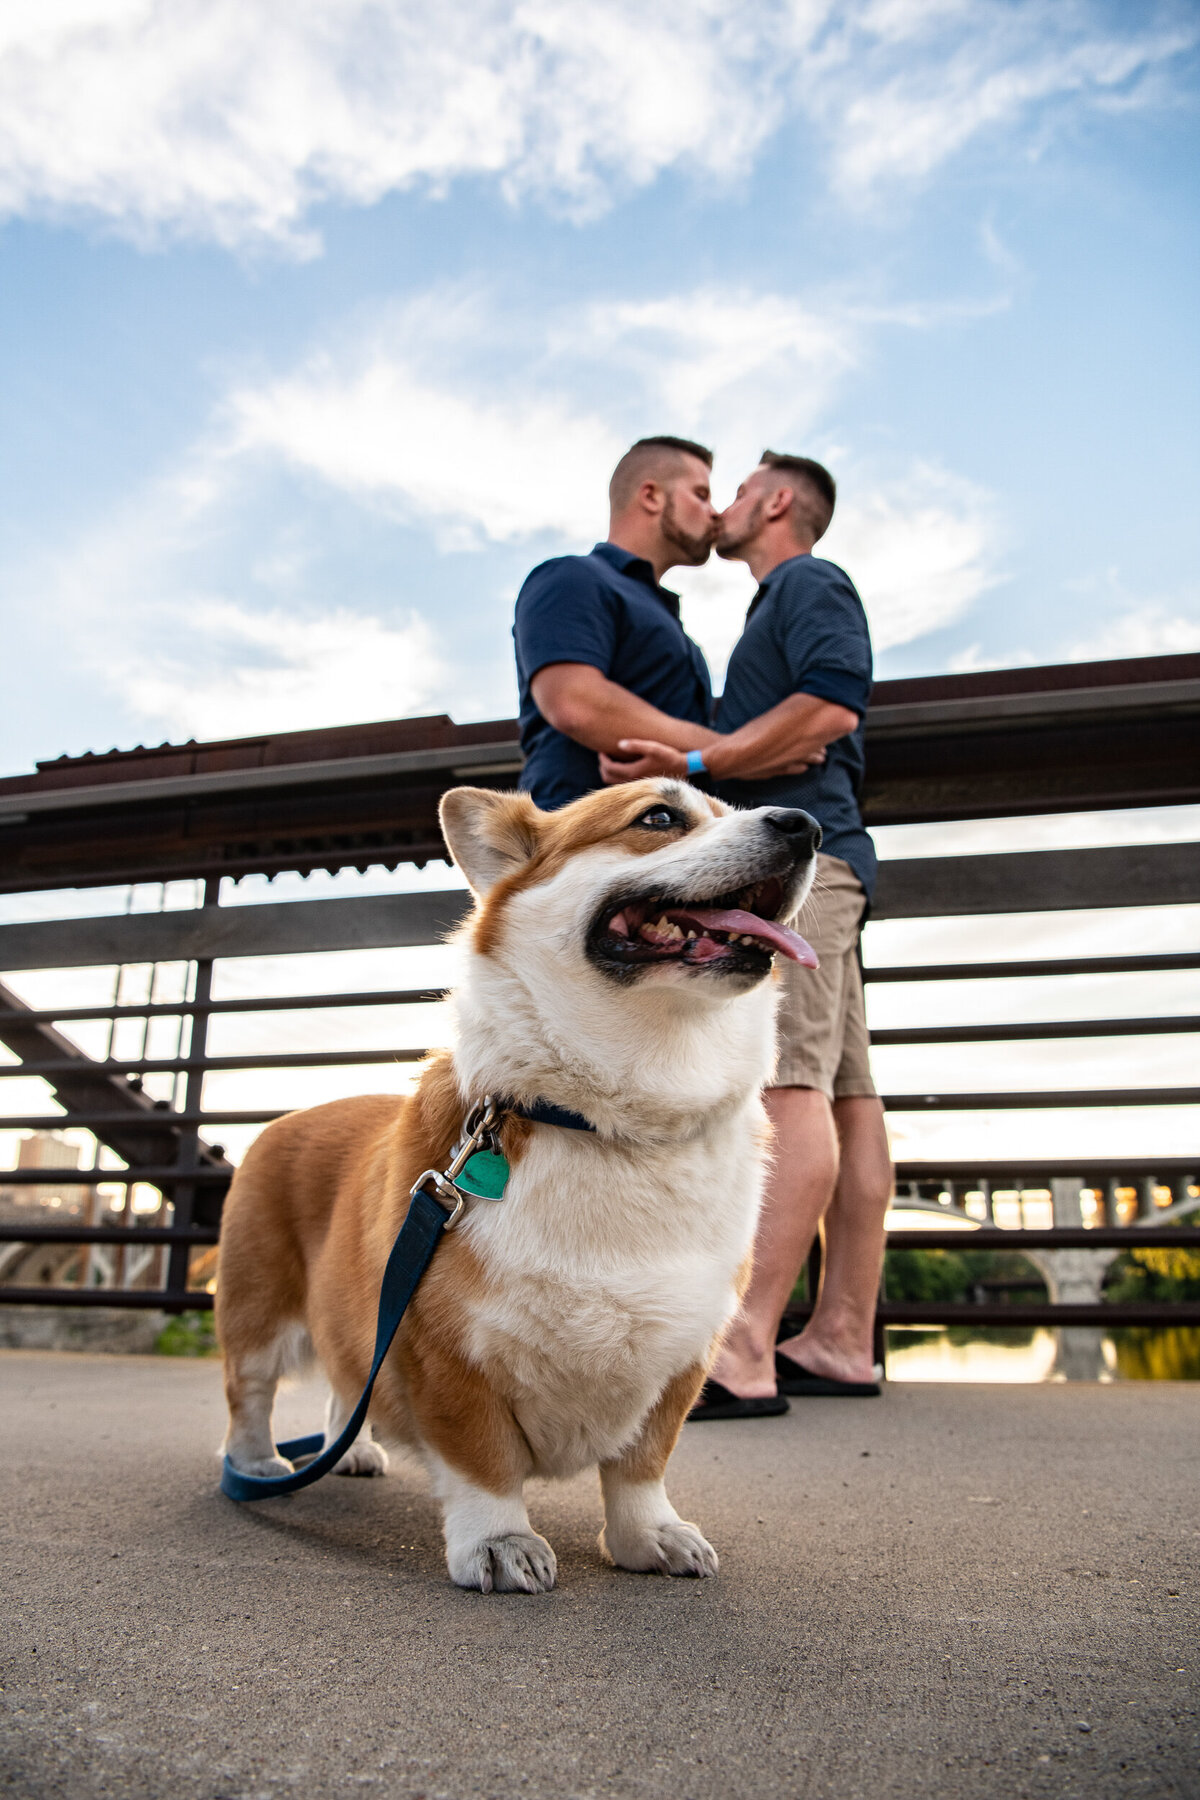 Minnesota Engagement Photography - LGBTQ Friendly - Dog Friendly - RKH Images (5 of 27)